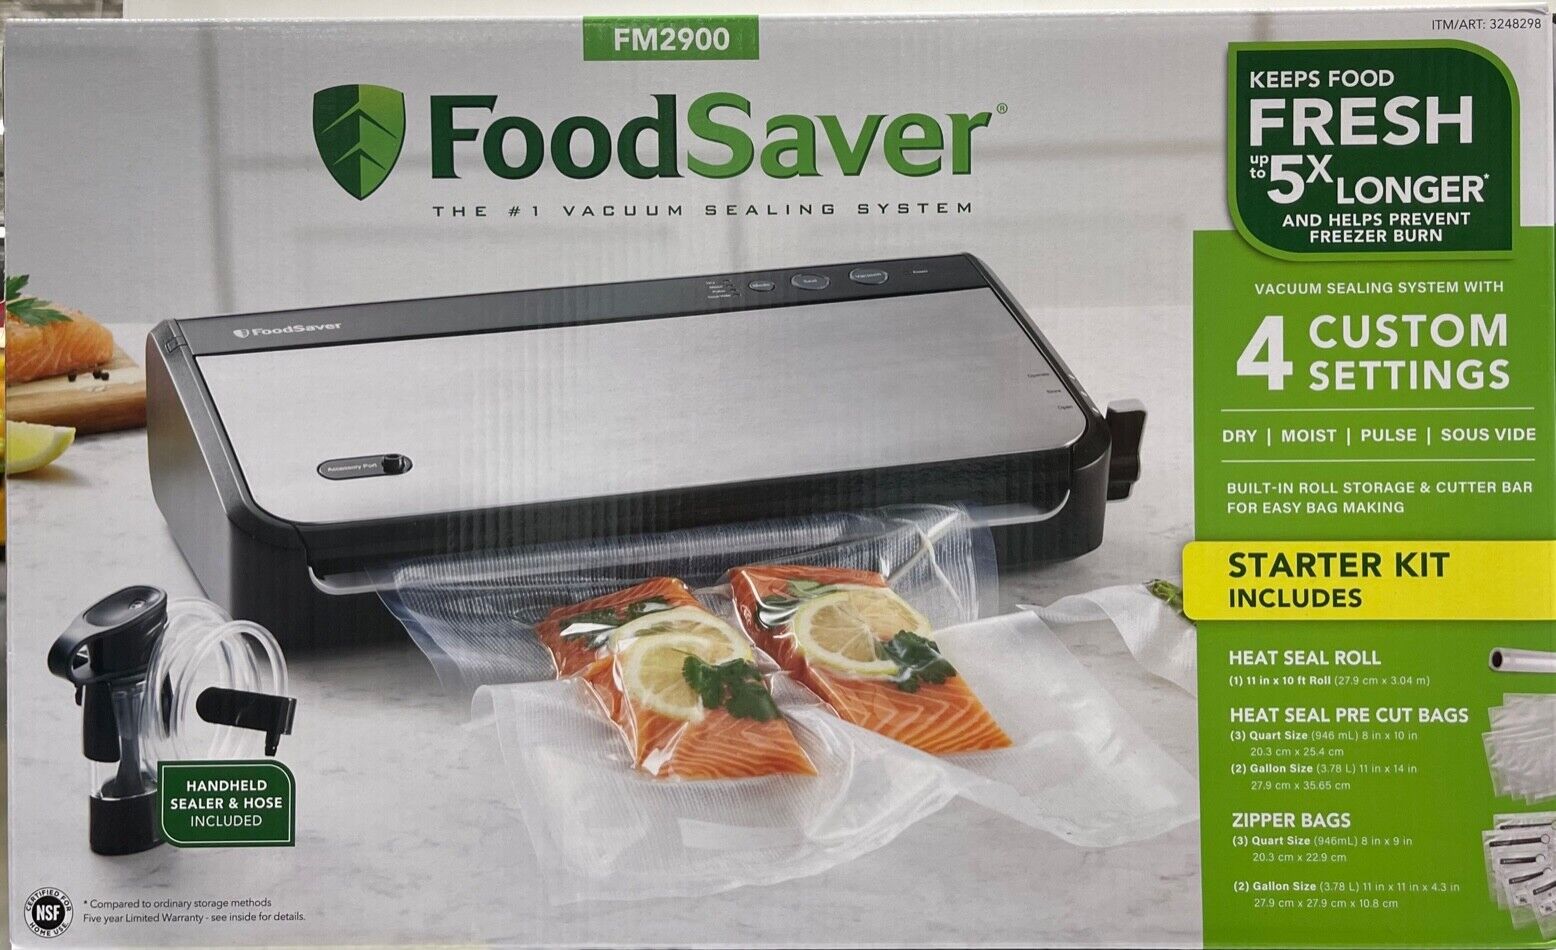 food saver fm2900 price